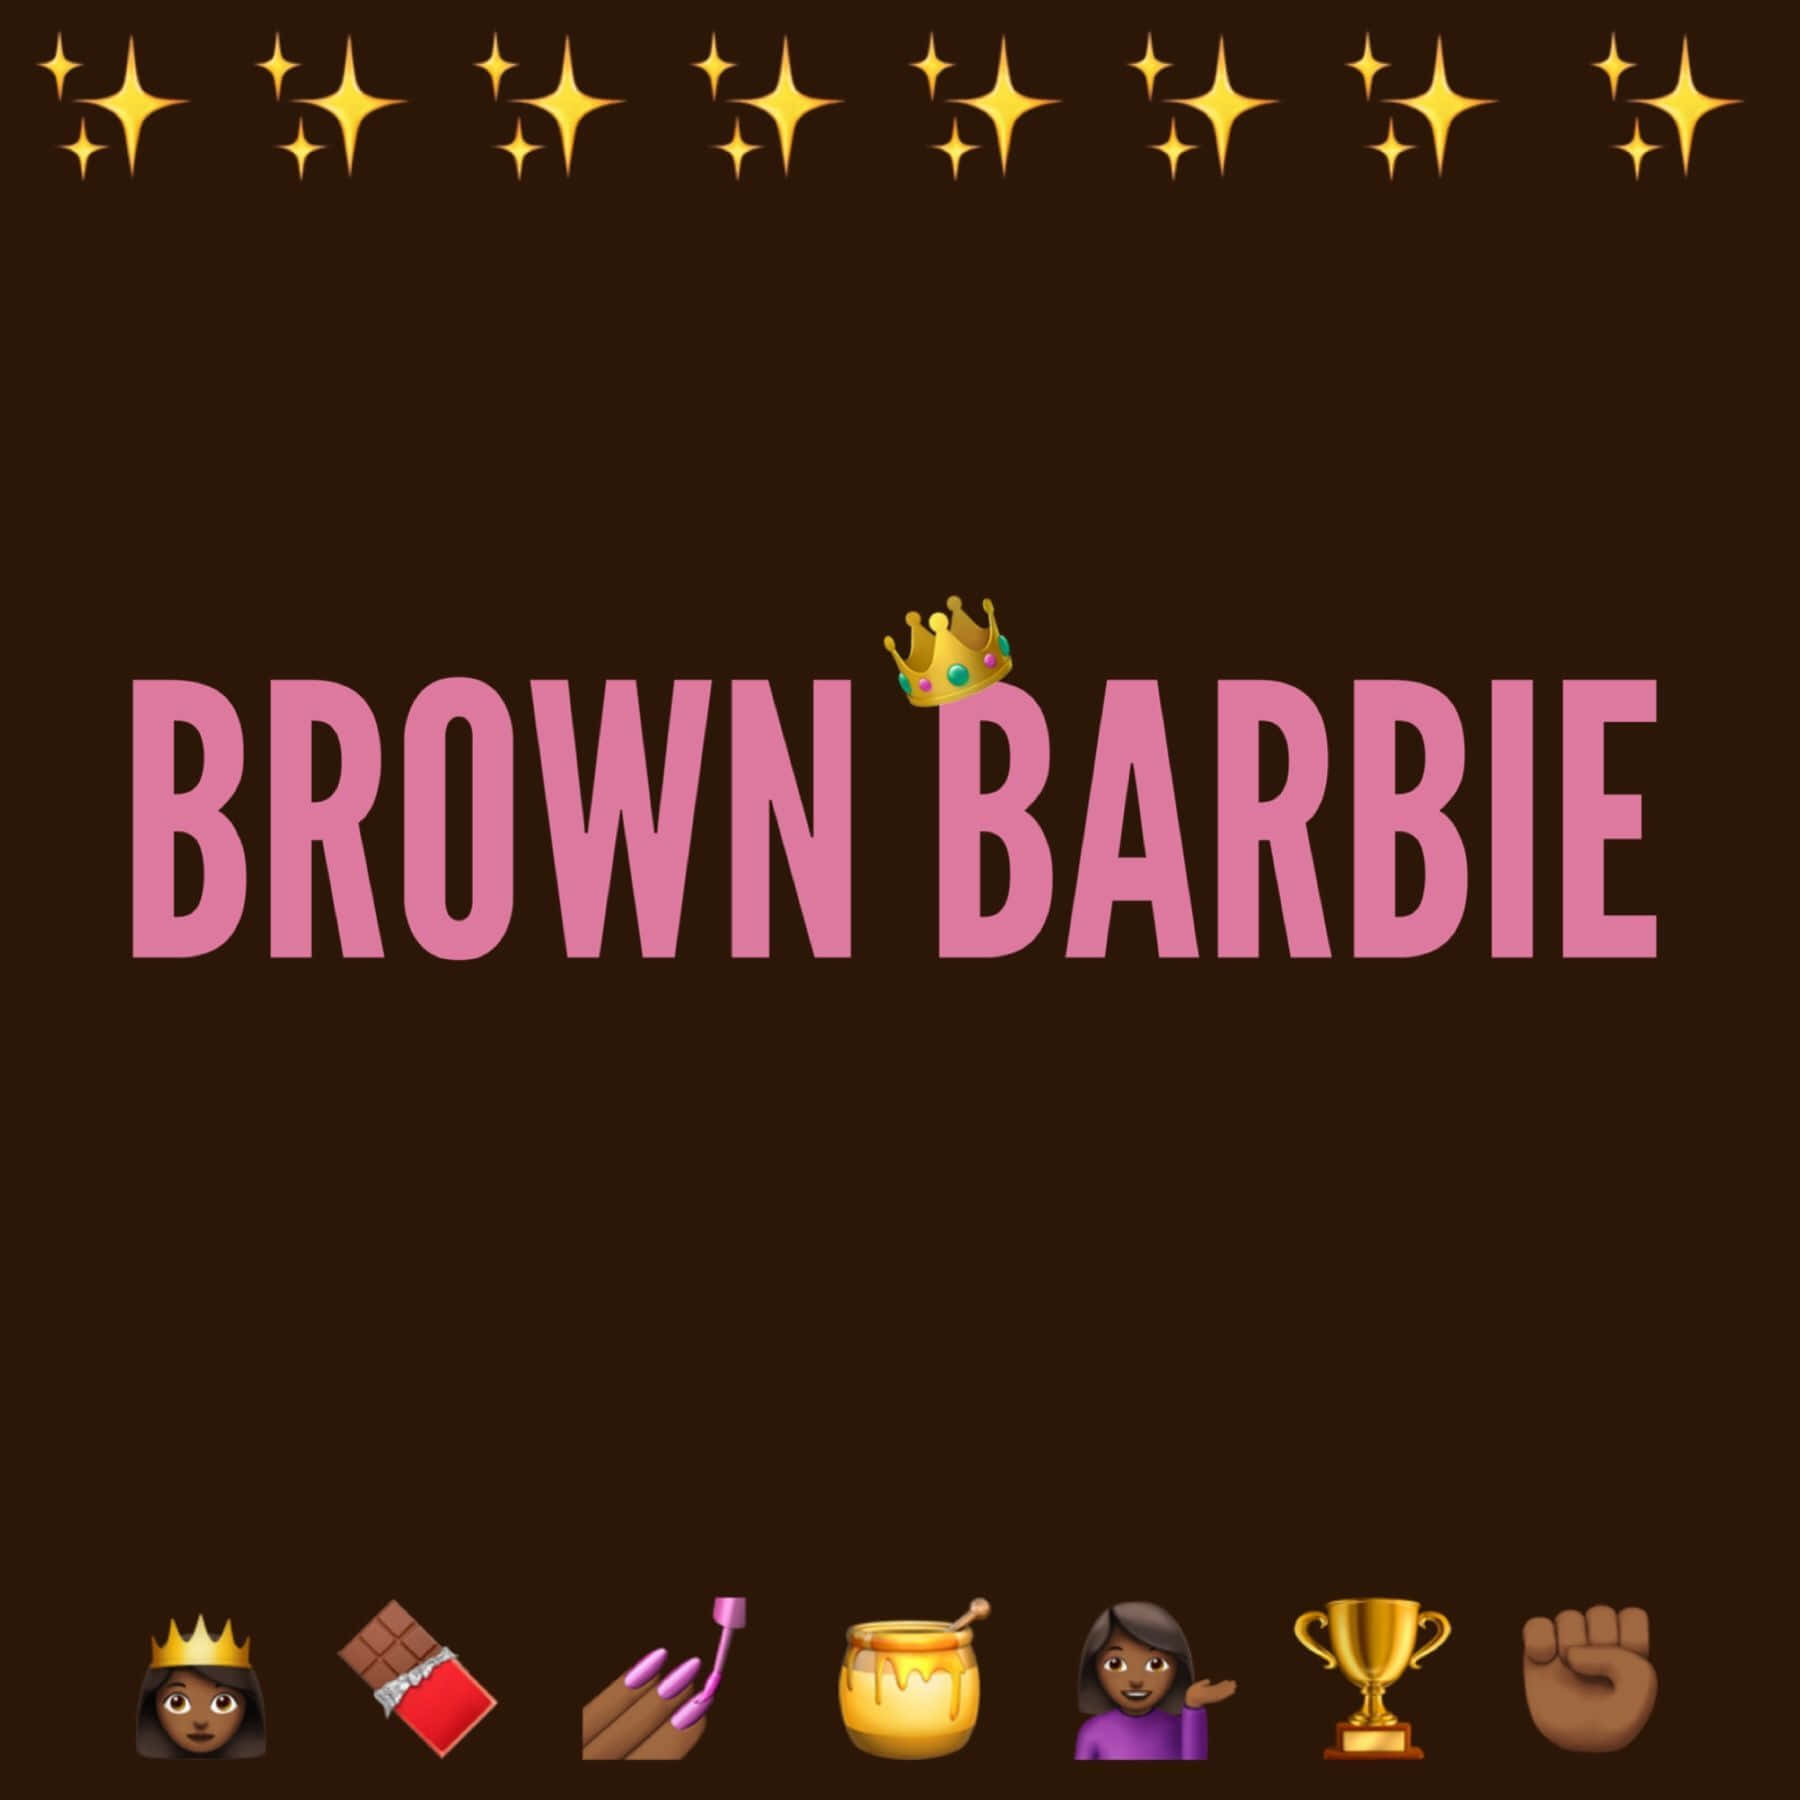 Brown Barbie - Emojis For The Emoji App Wallpaper